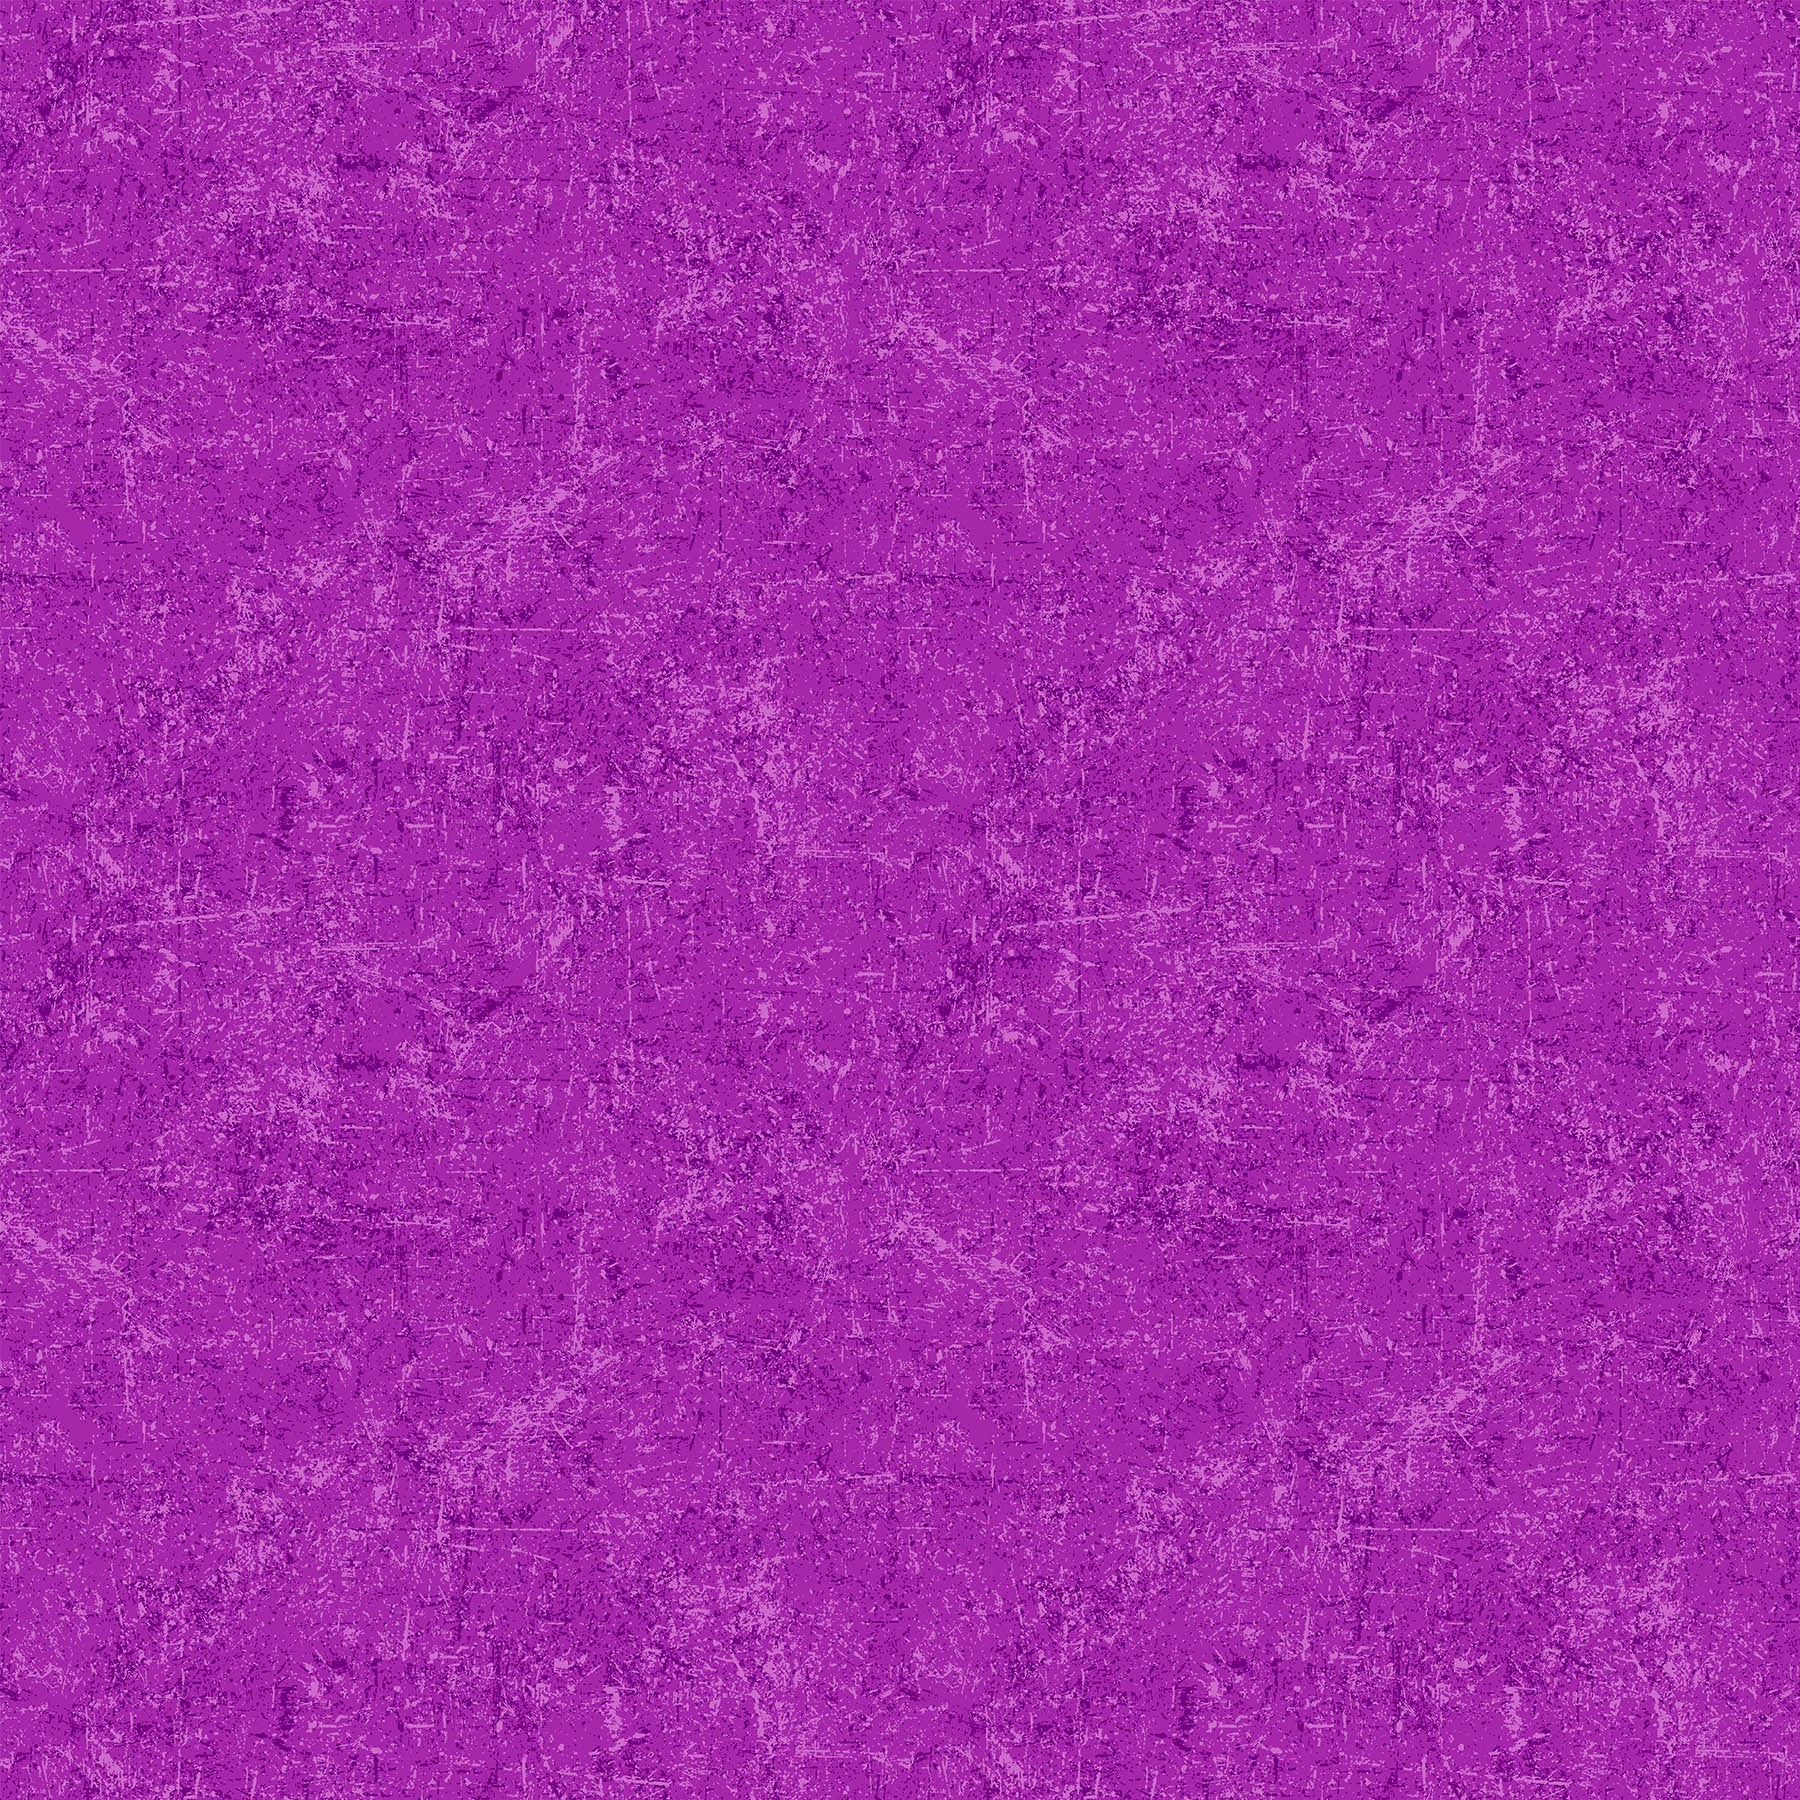 Glisten Quilt Fabric - Blender in Grape Purple - P10091-84